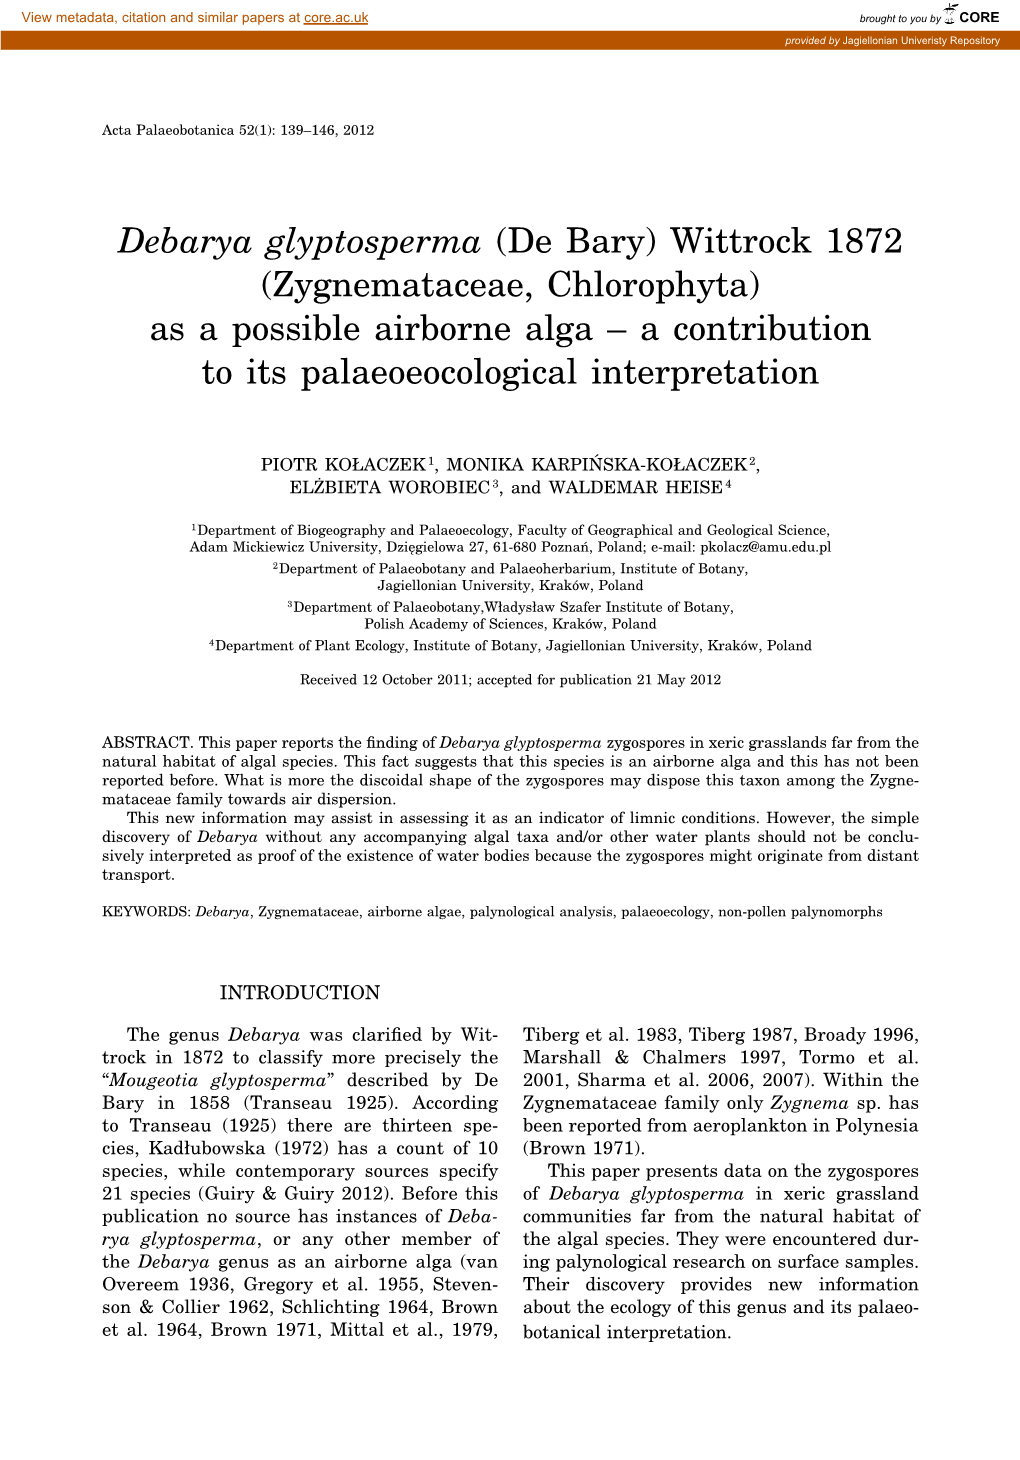 Debarya Glyptosperma (De Bary) Wittrock 1872 (Zygnemataceae, Chlorophyta) As a Possible Airborne Alga – a Contribution to Its Palaeoeocological Interpretation